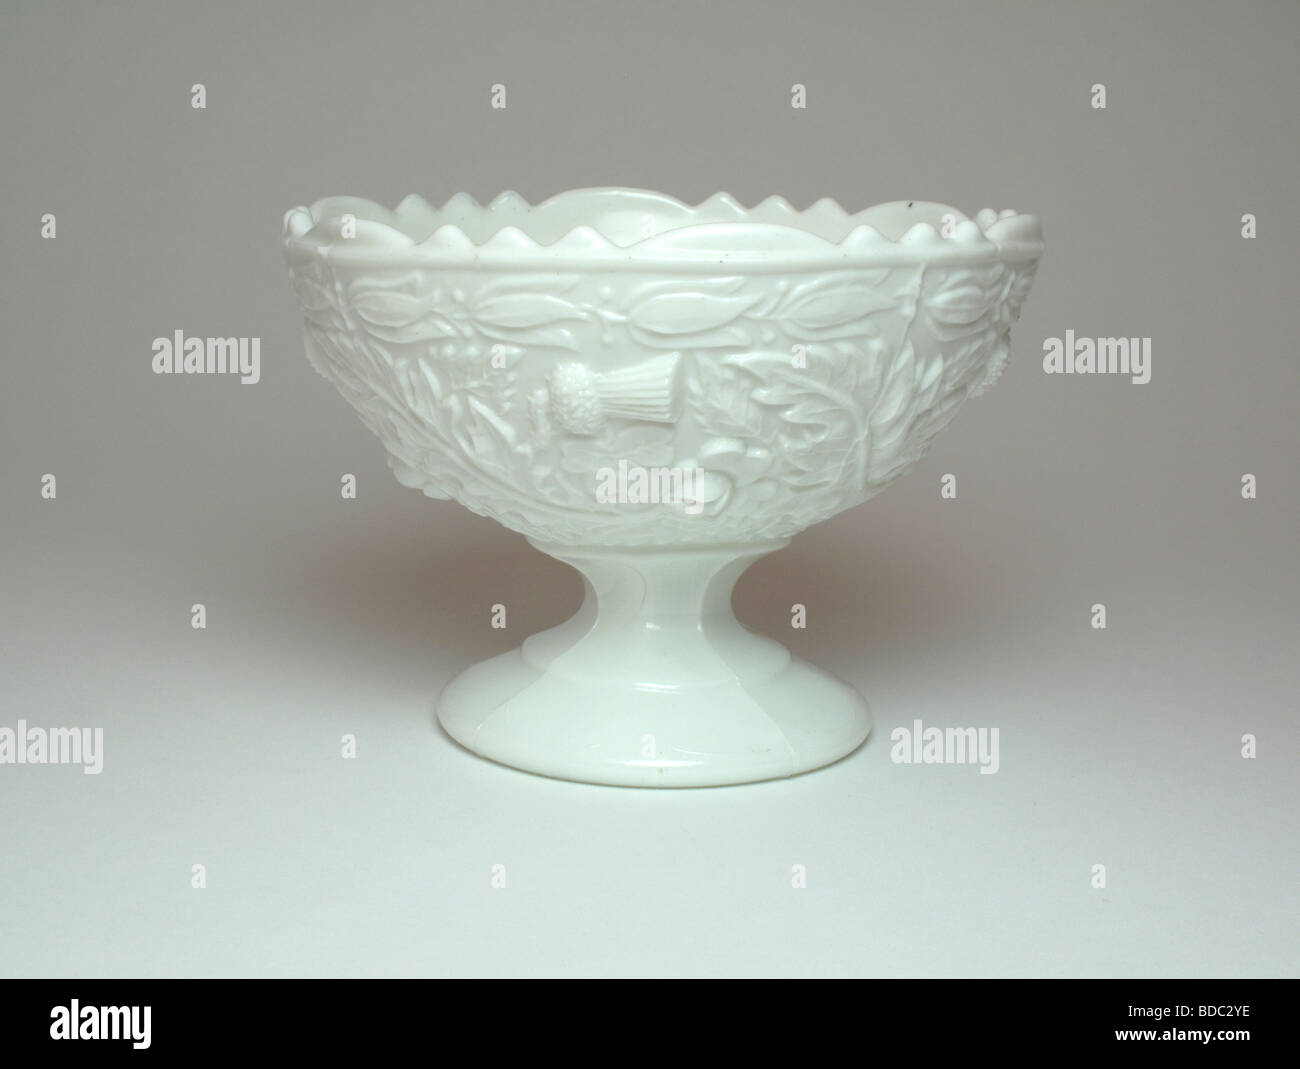 Henry Greener pressed white glass bowl Stock Photo